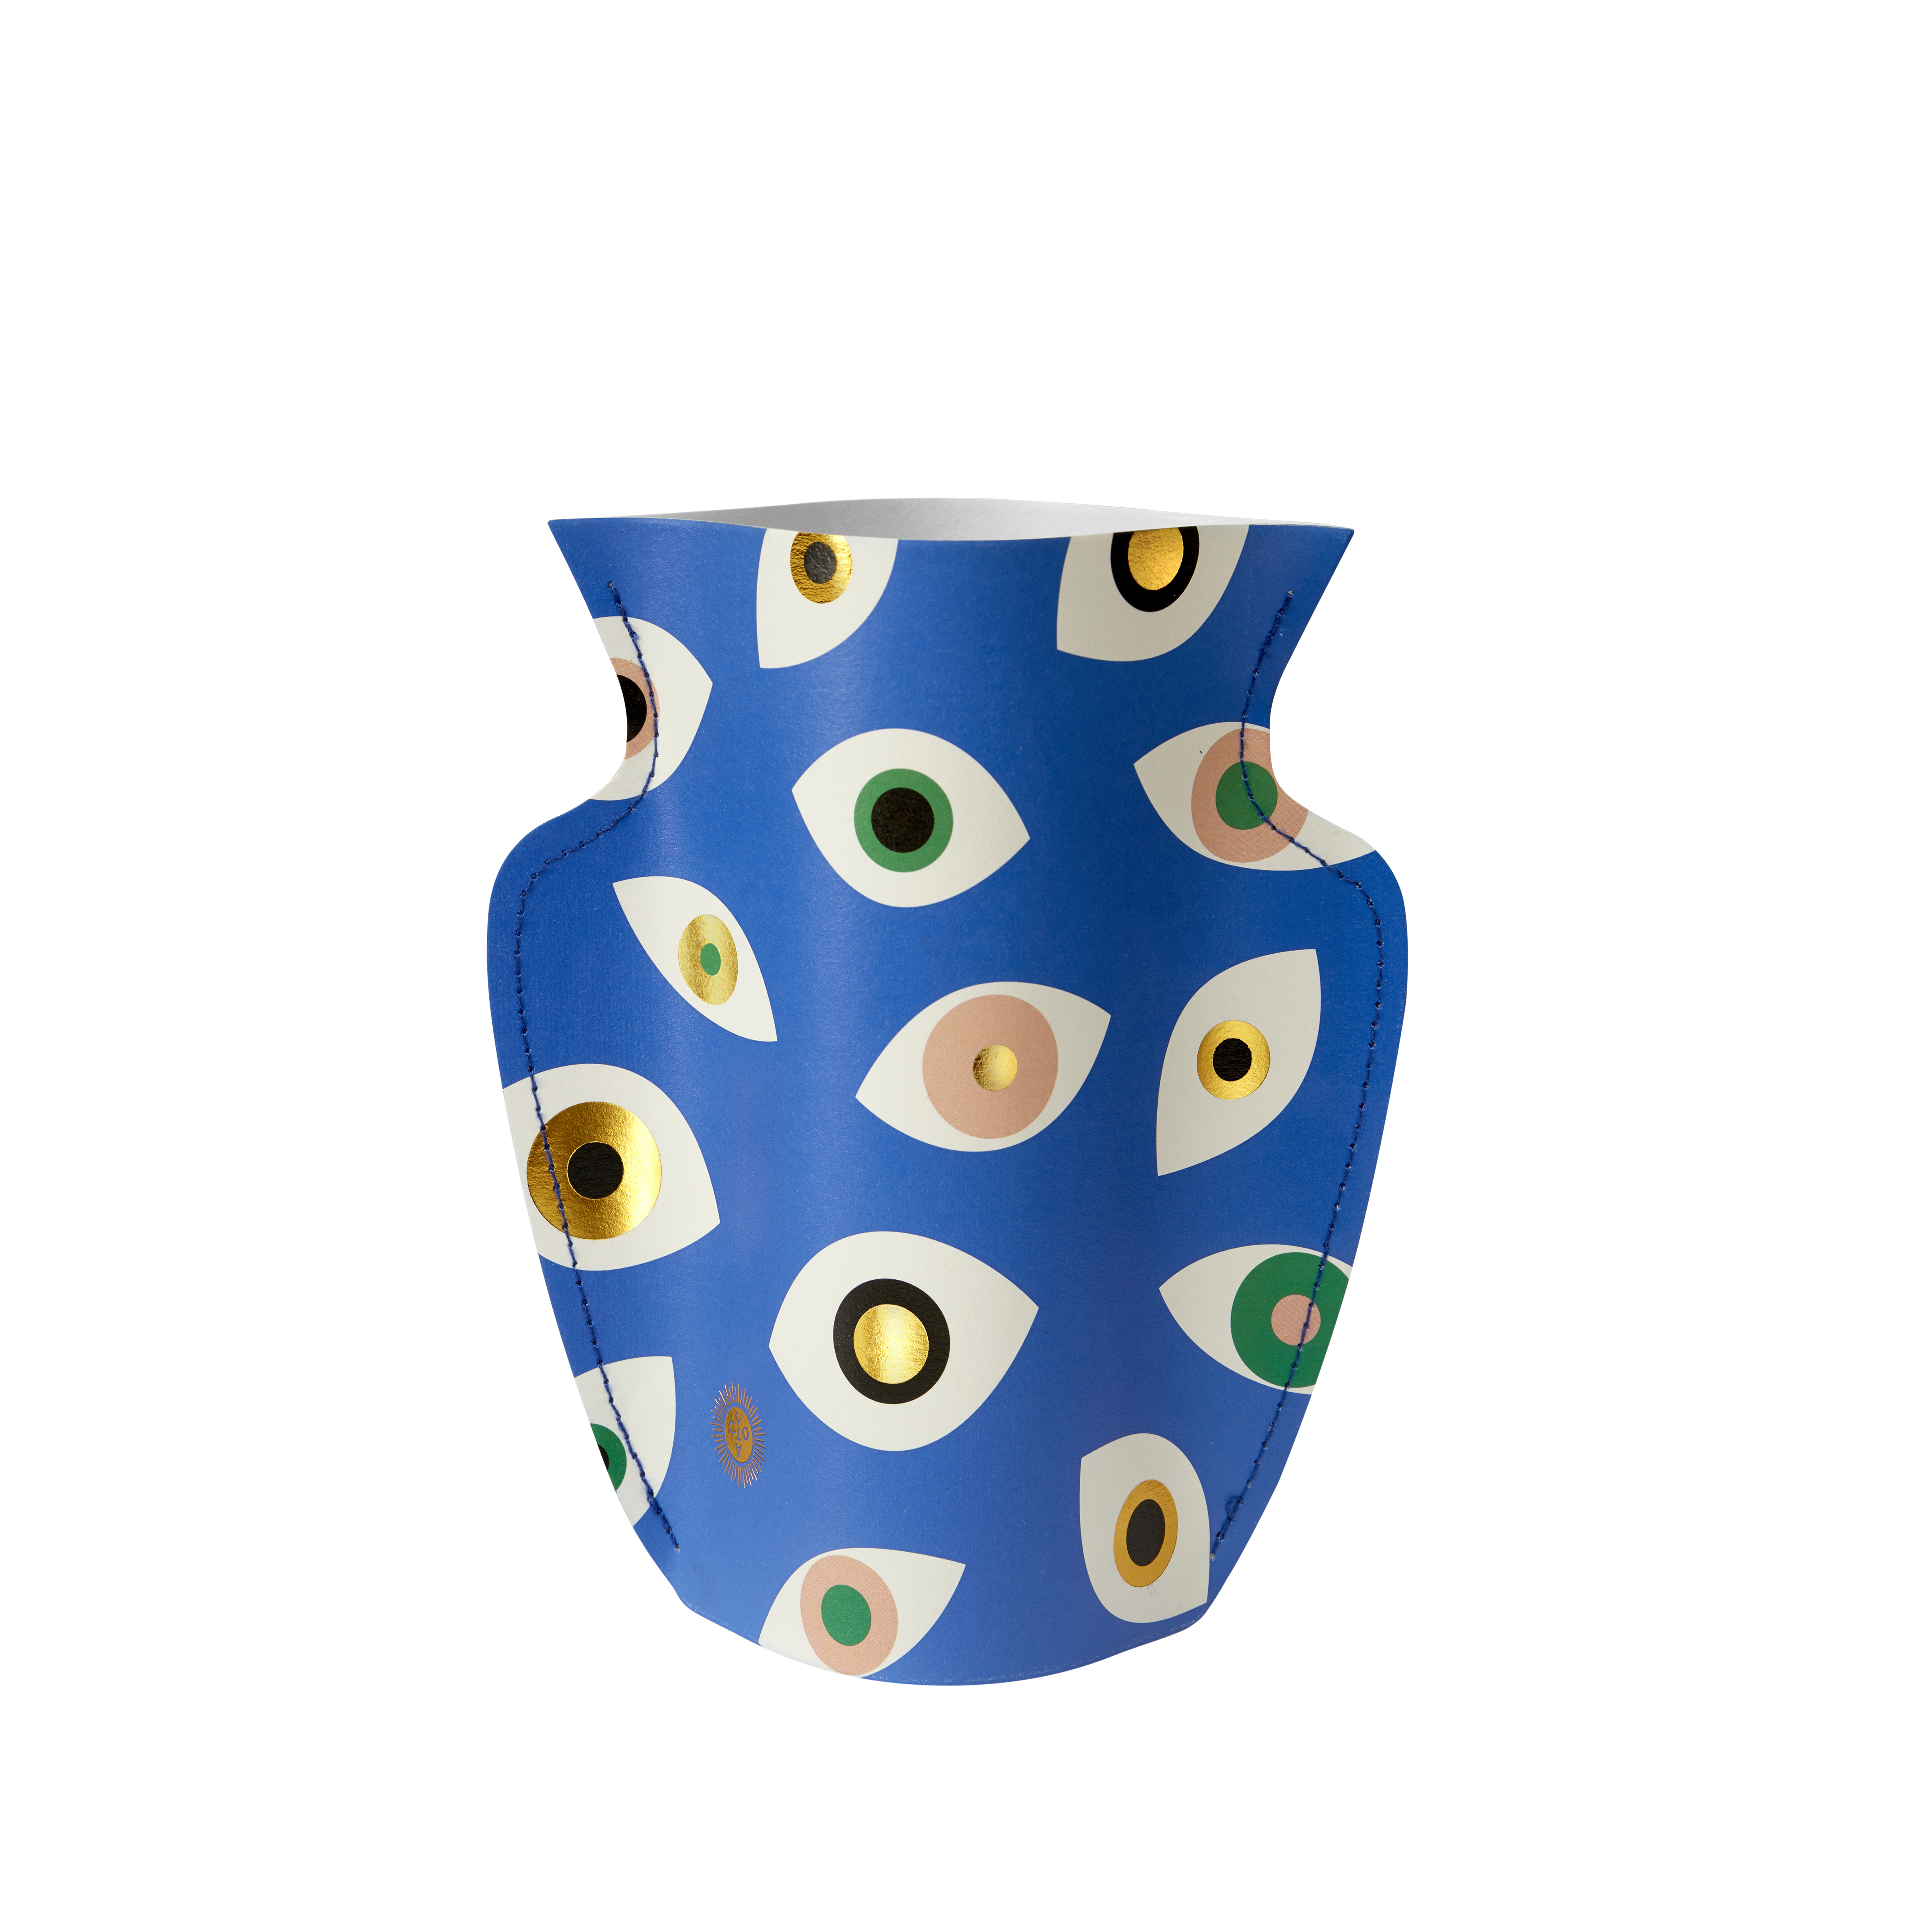 OMPVNB-18 - Mini Paper Vase Nazar